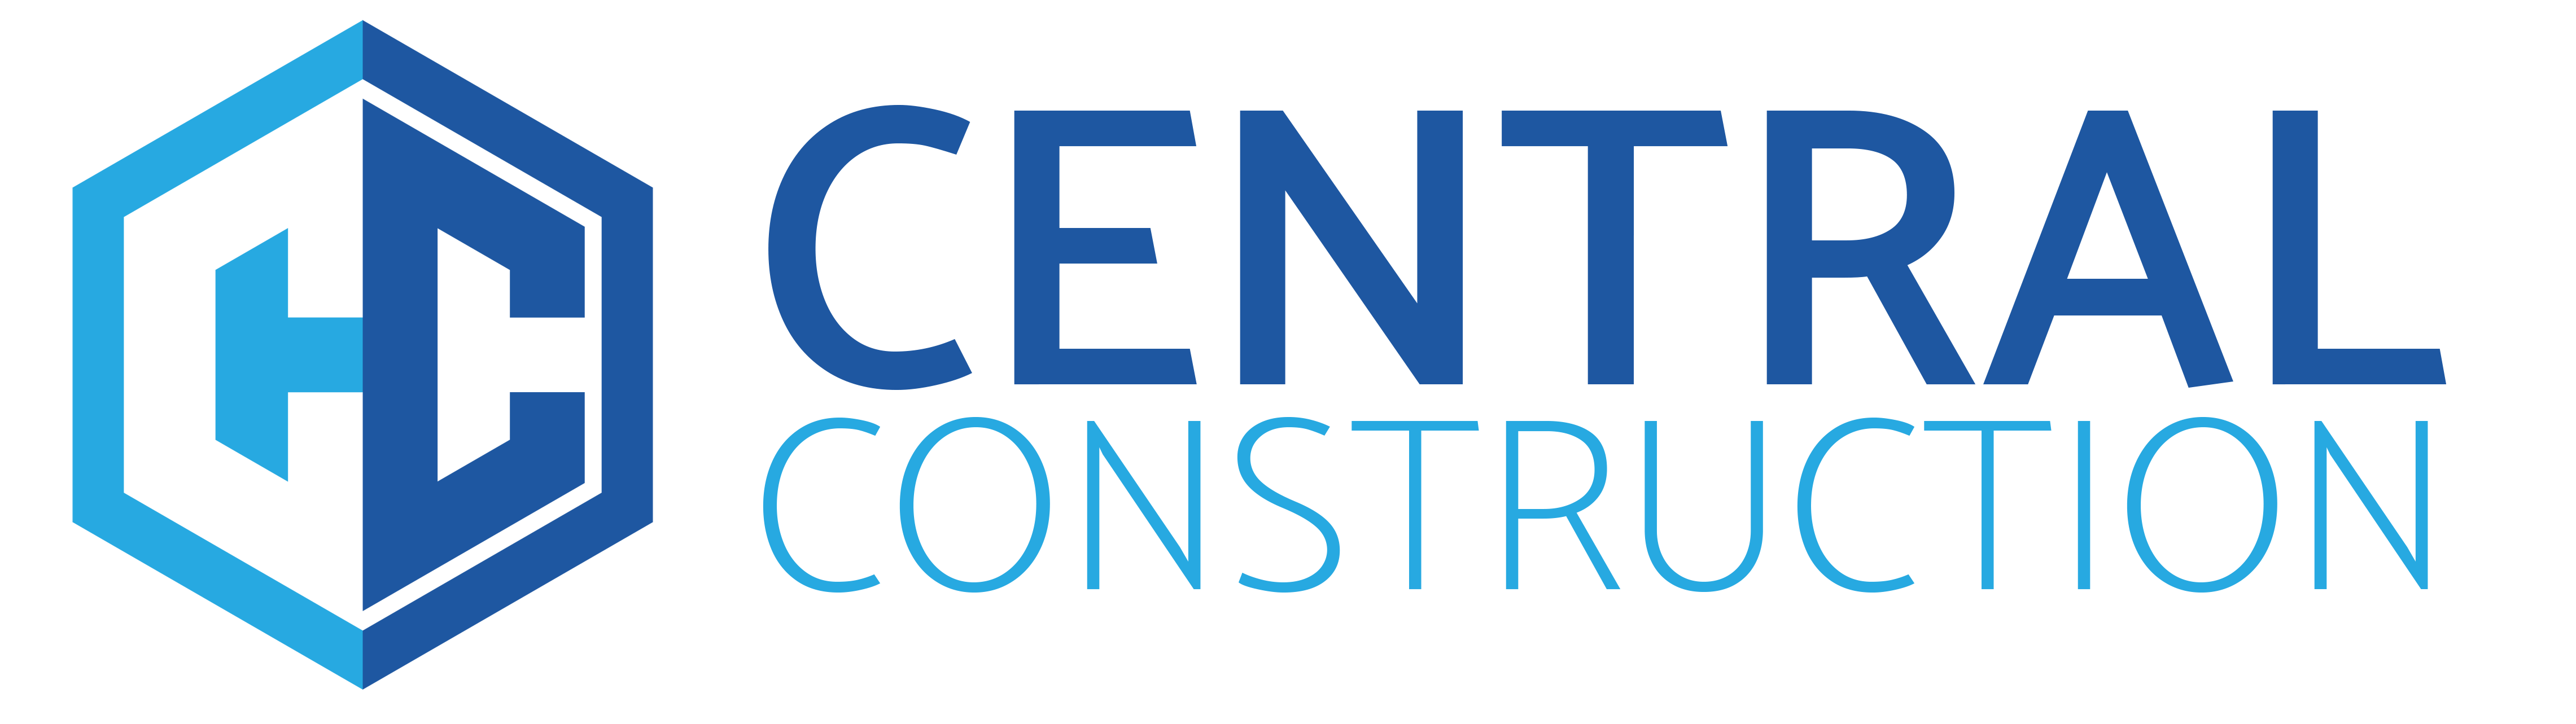 Central Construction, Construction in Ontario